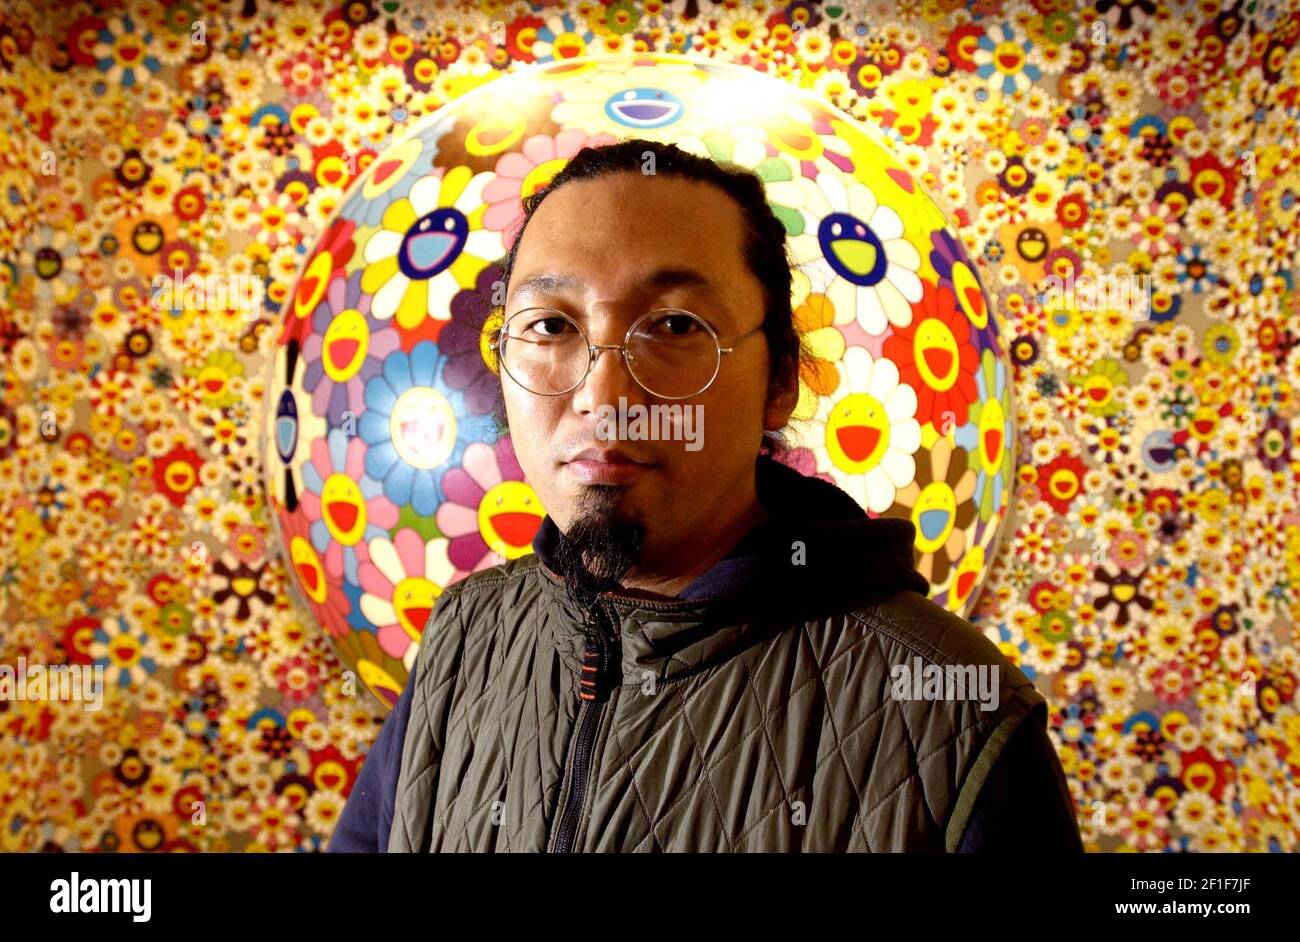 Takashi Murakami - Contemporary Art Lot 21 November 2008